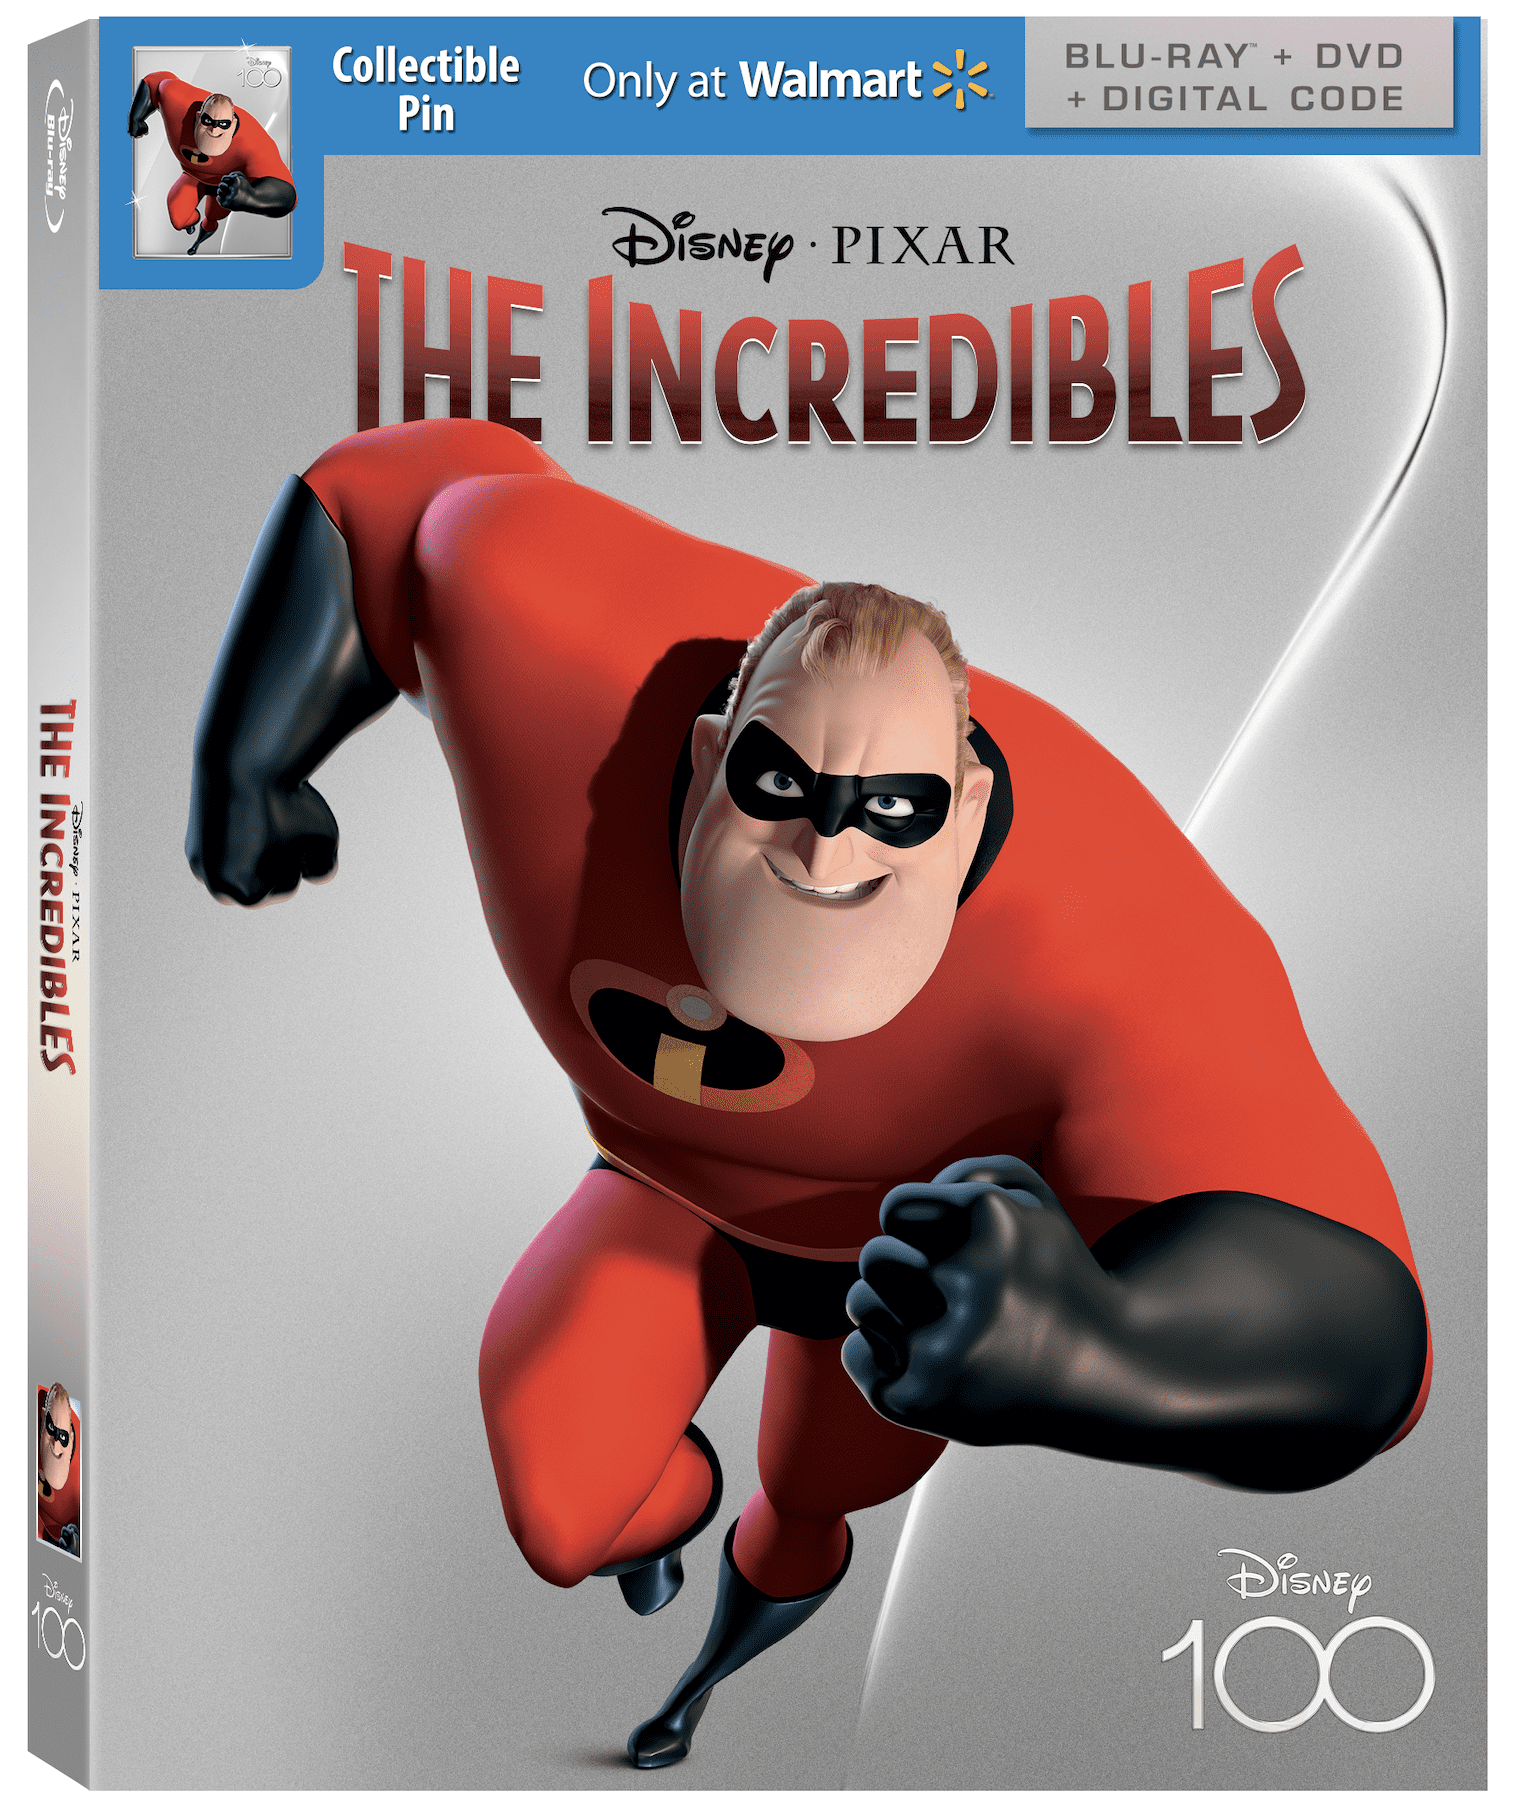 Incredibles - Disney100 Edition Walmart Exclusive (Blu-ray + DVD + Digital  Code)